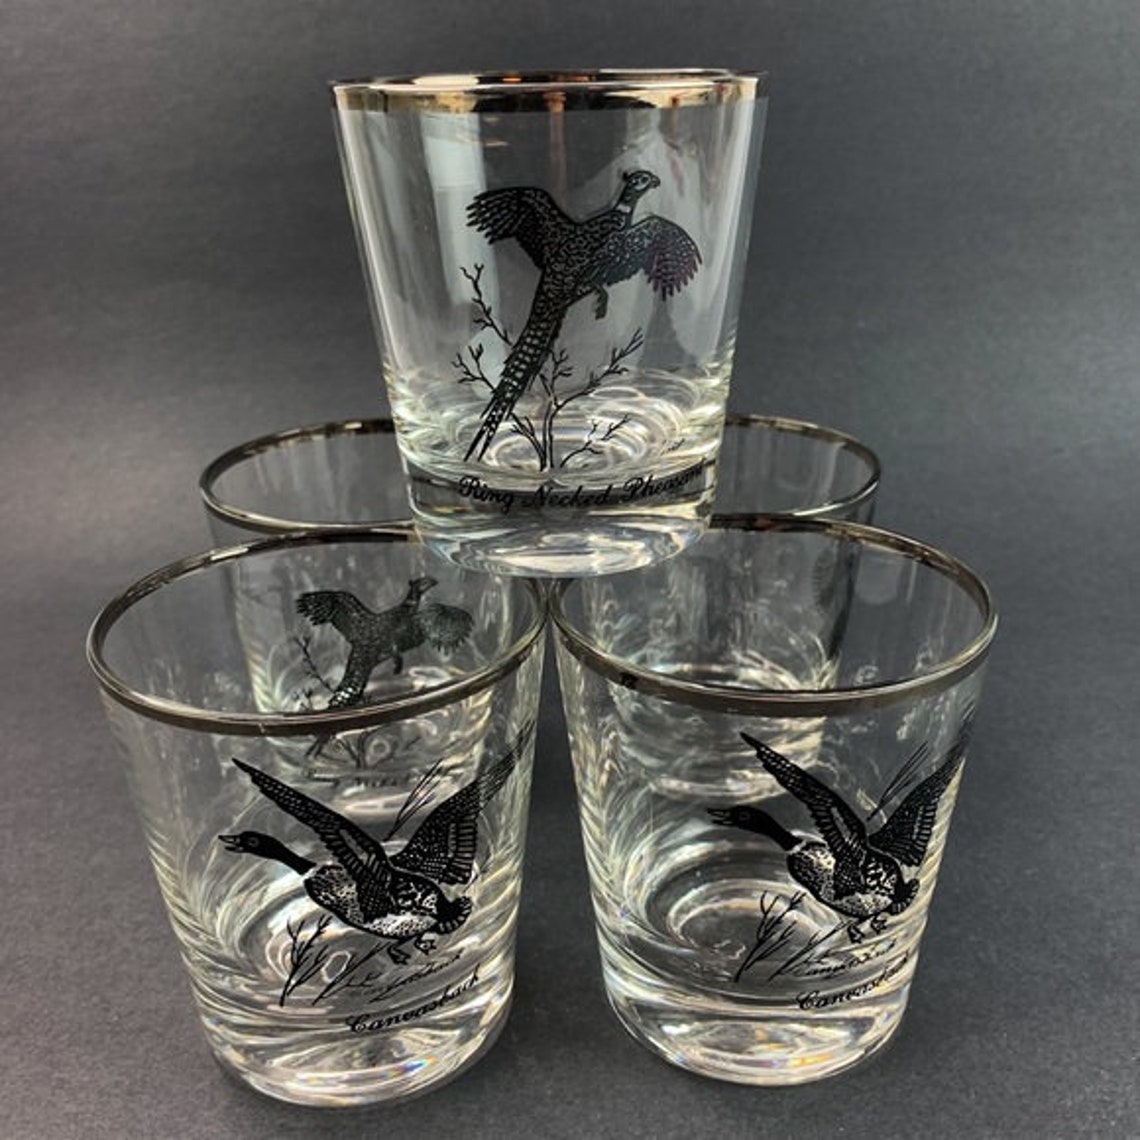 Wild Game Birds Barware Rock Glasses Set of 5 | Etsy